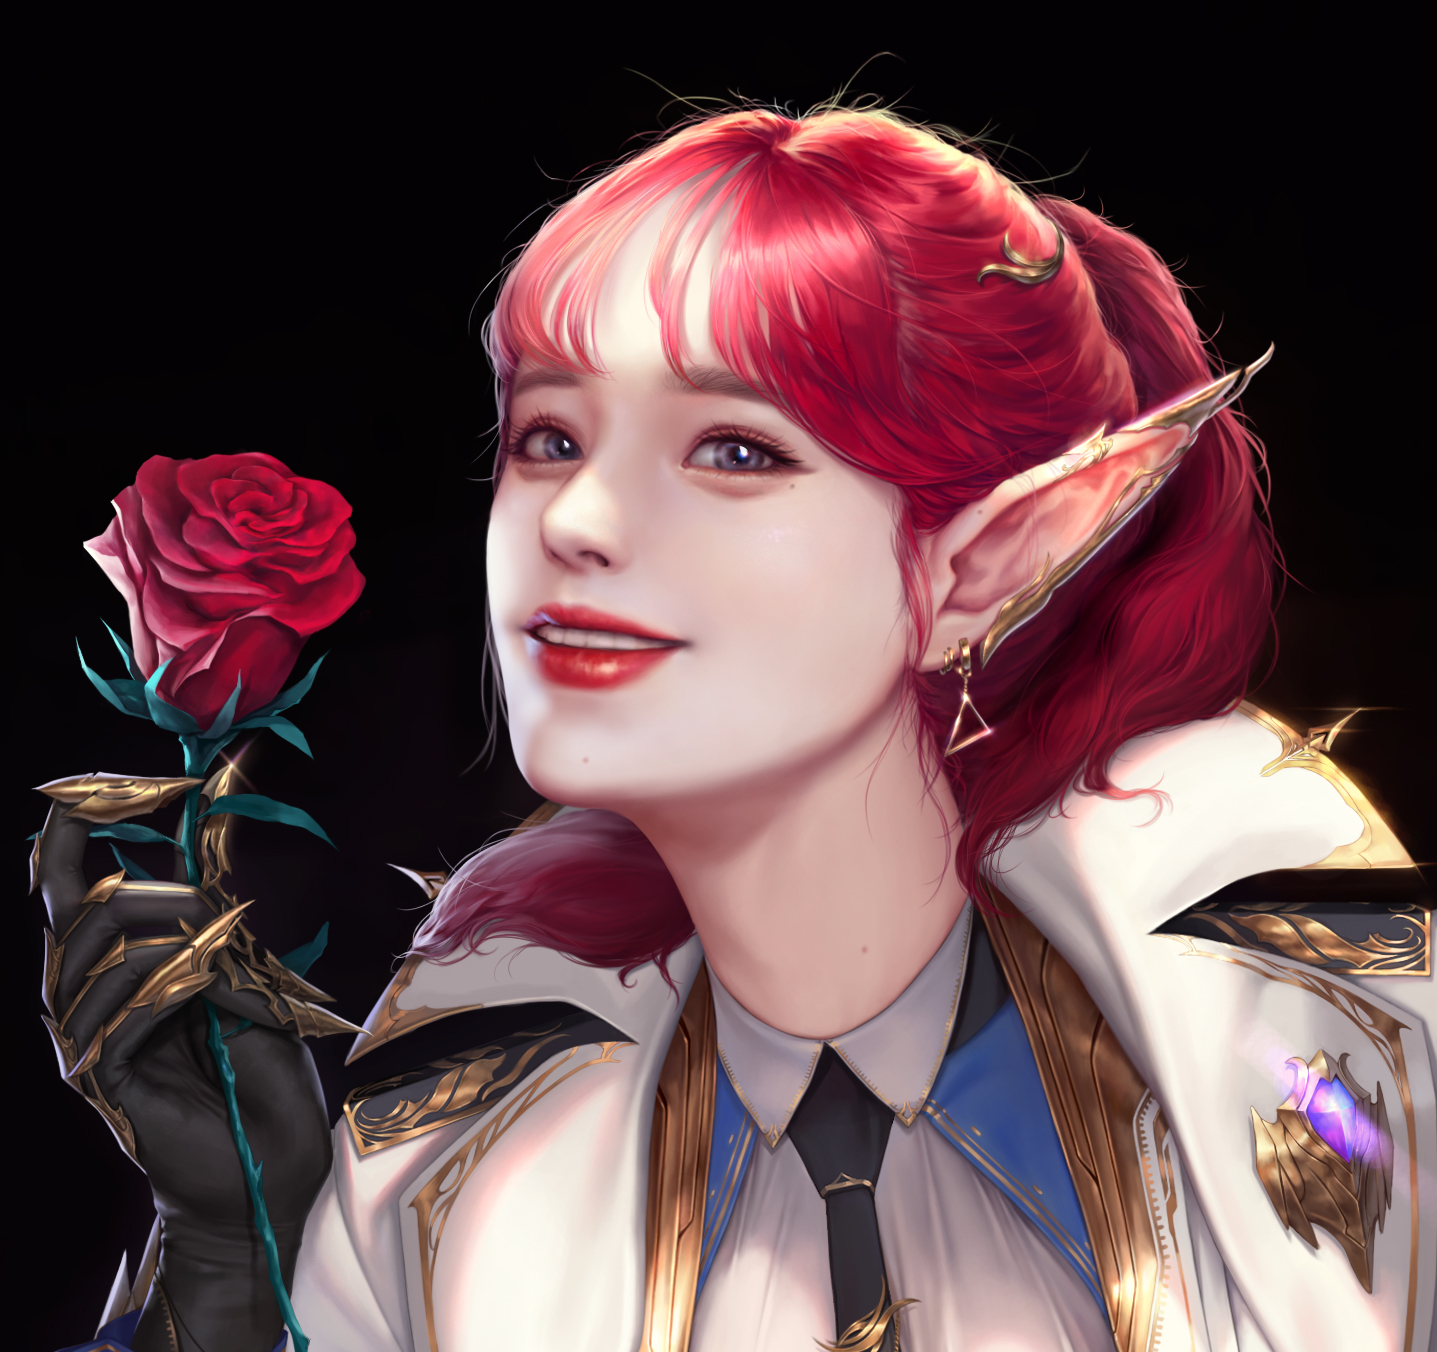 Fantasy Girl Painting Yong Jun Park Redhead Pointy Ears Rose 1437x1352